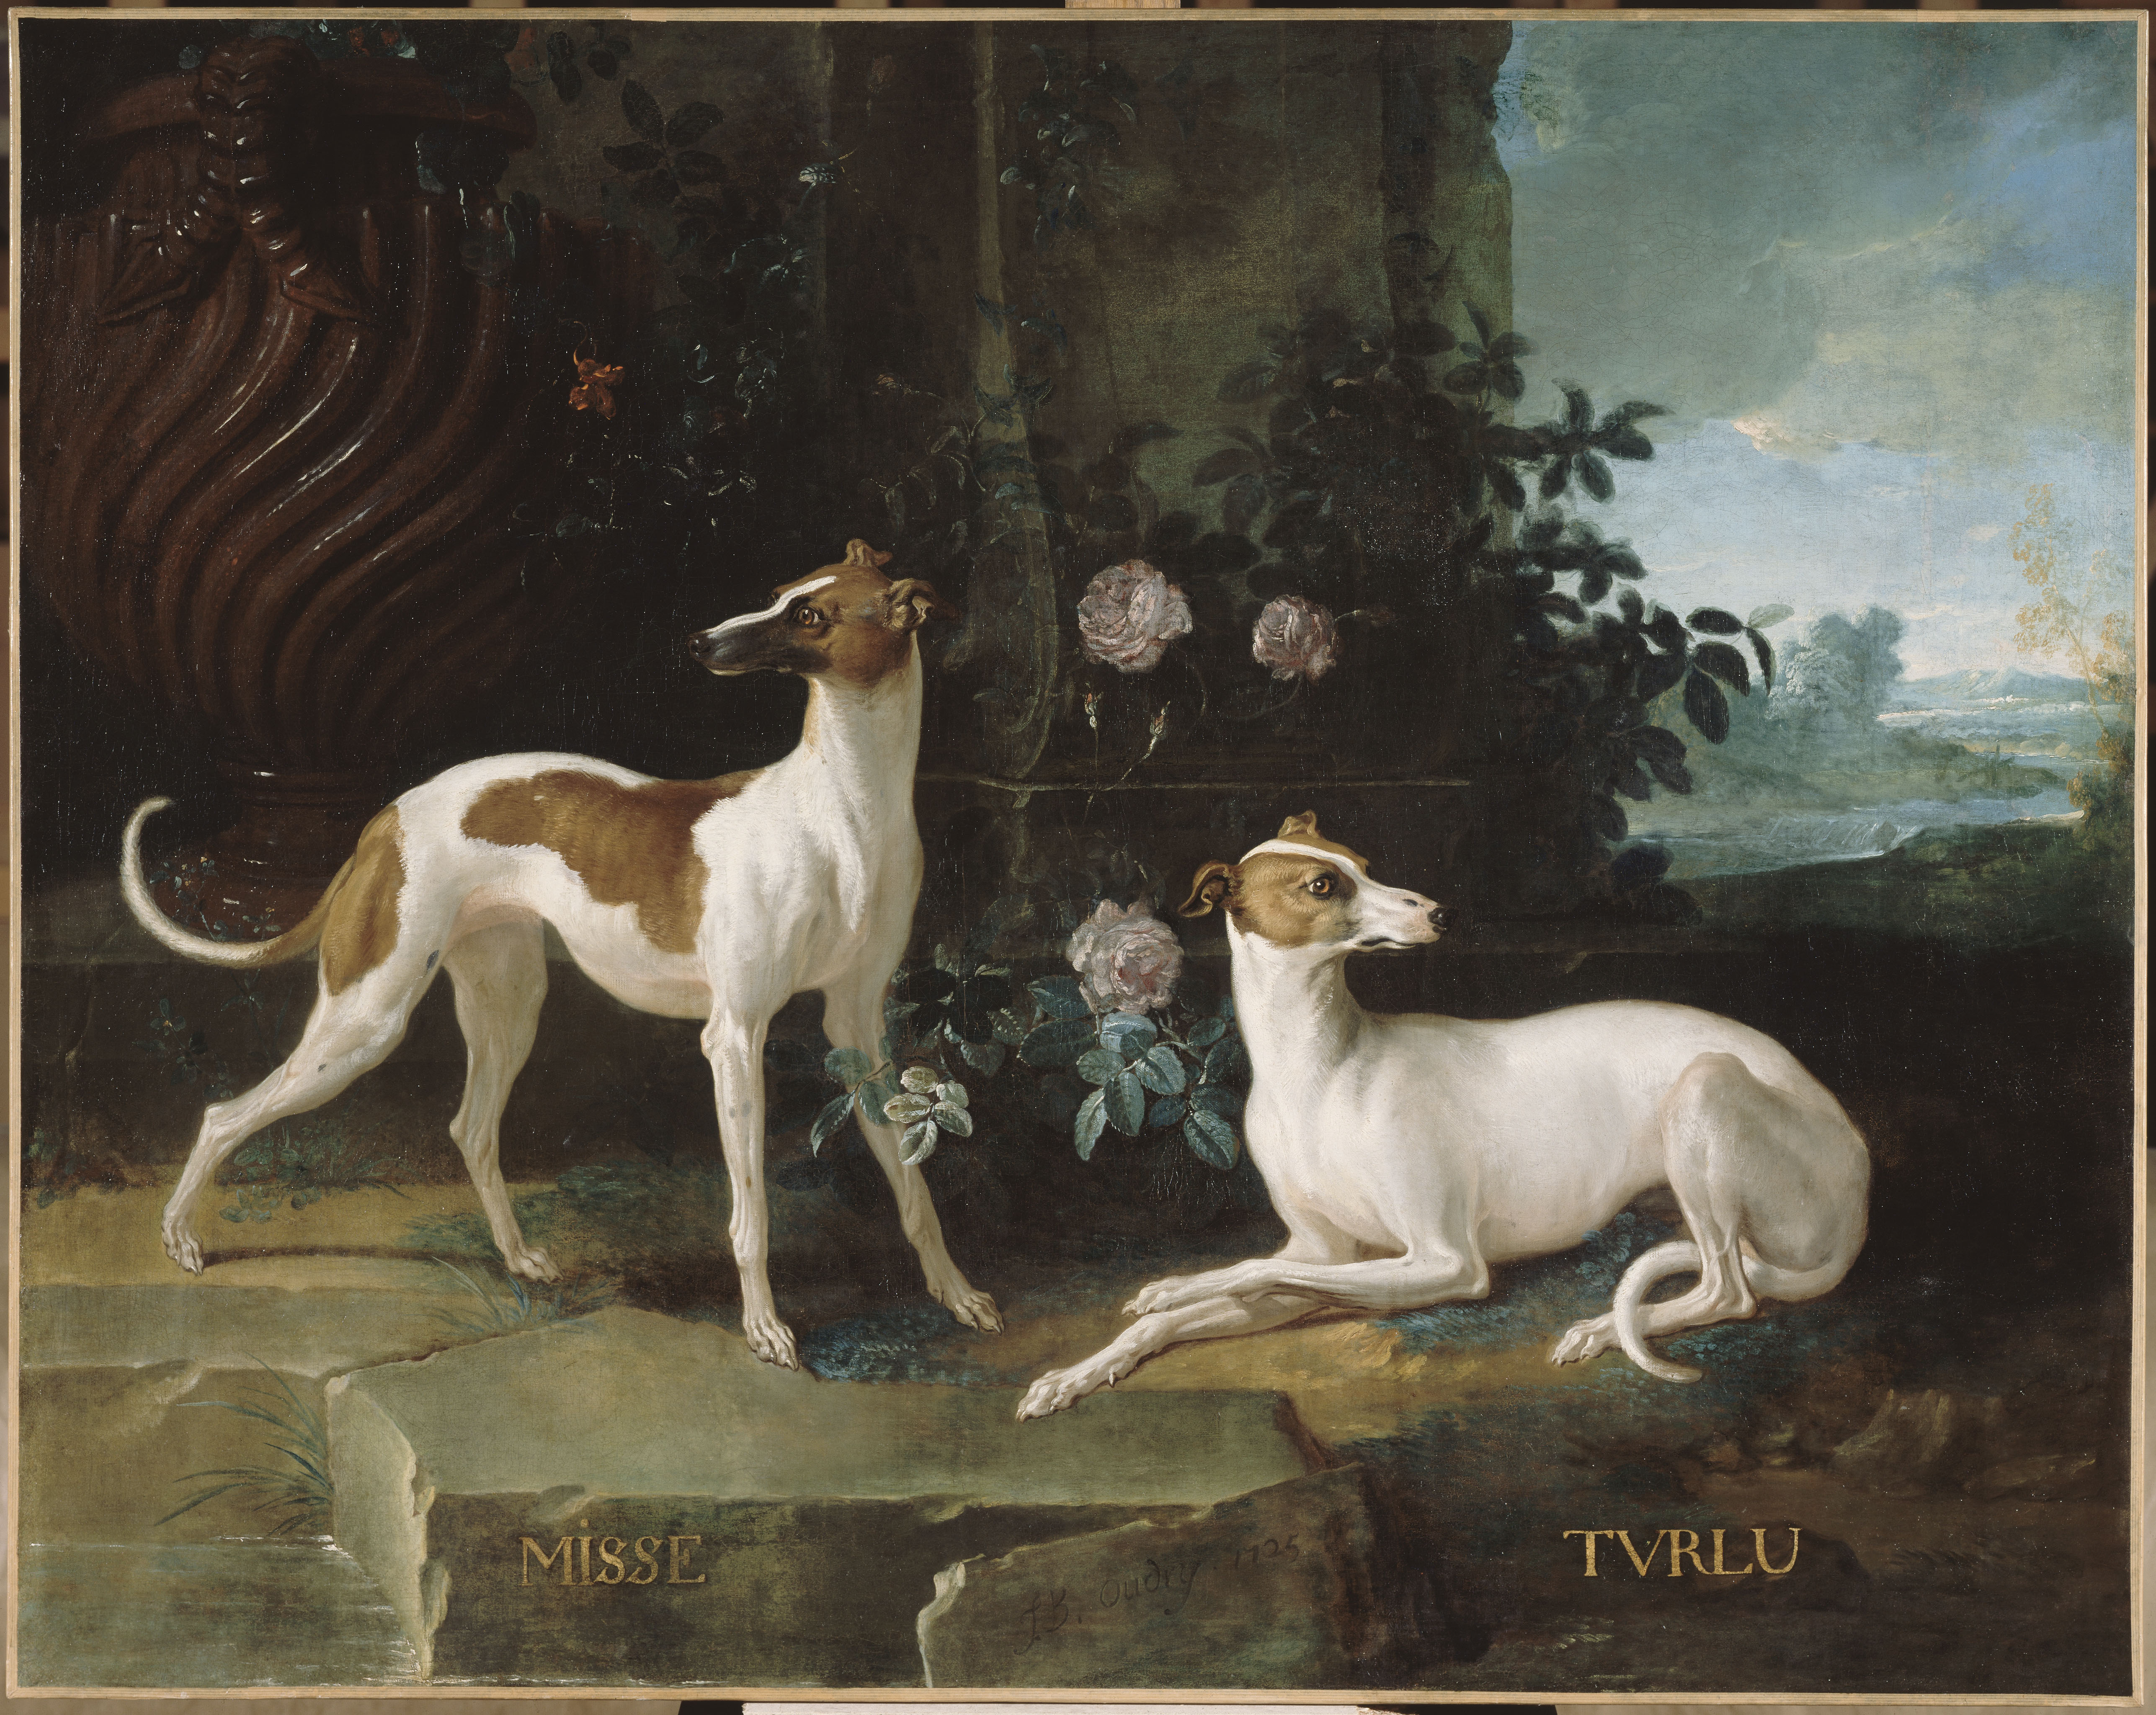 Misse and Turlu by Jean Baptiste Oudry - Château de Fontainebleau